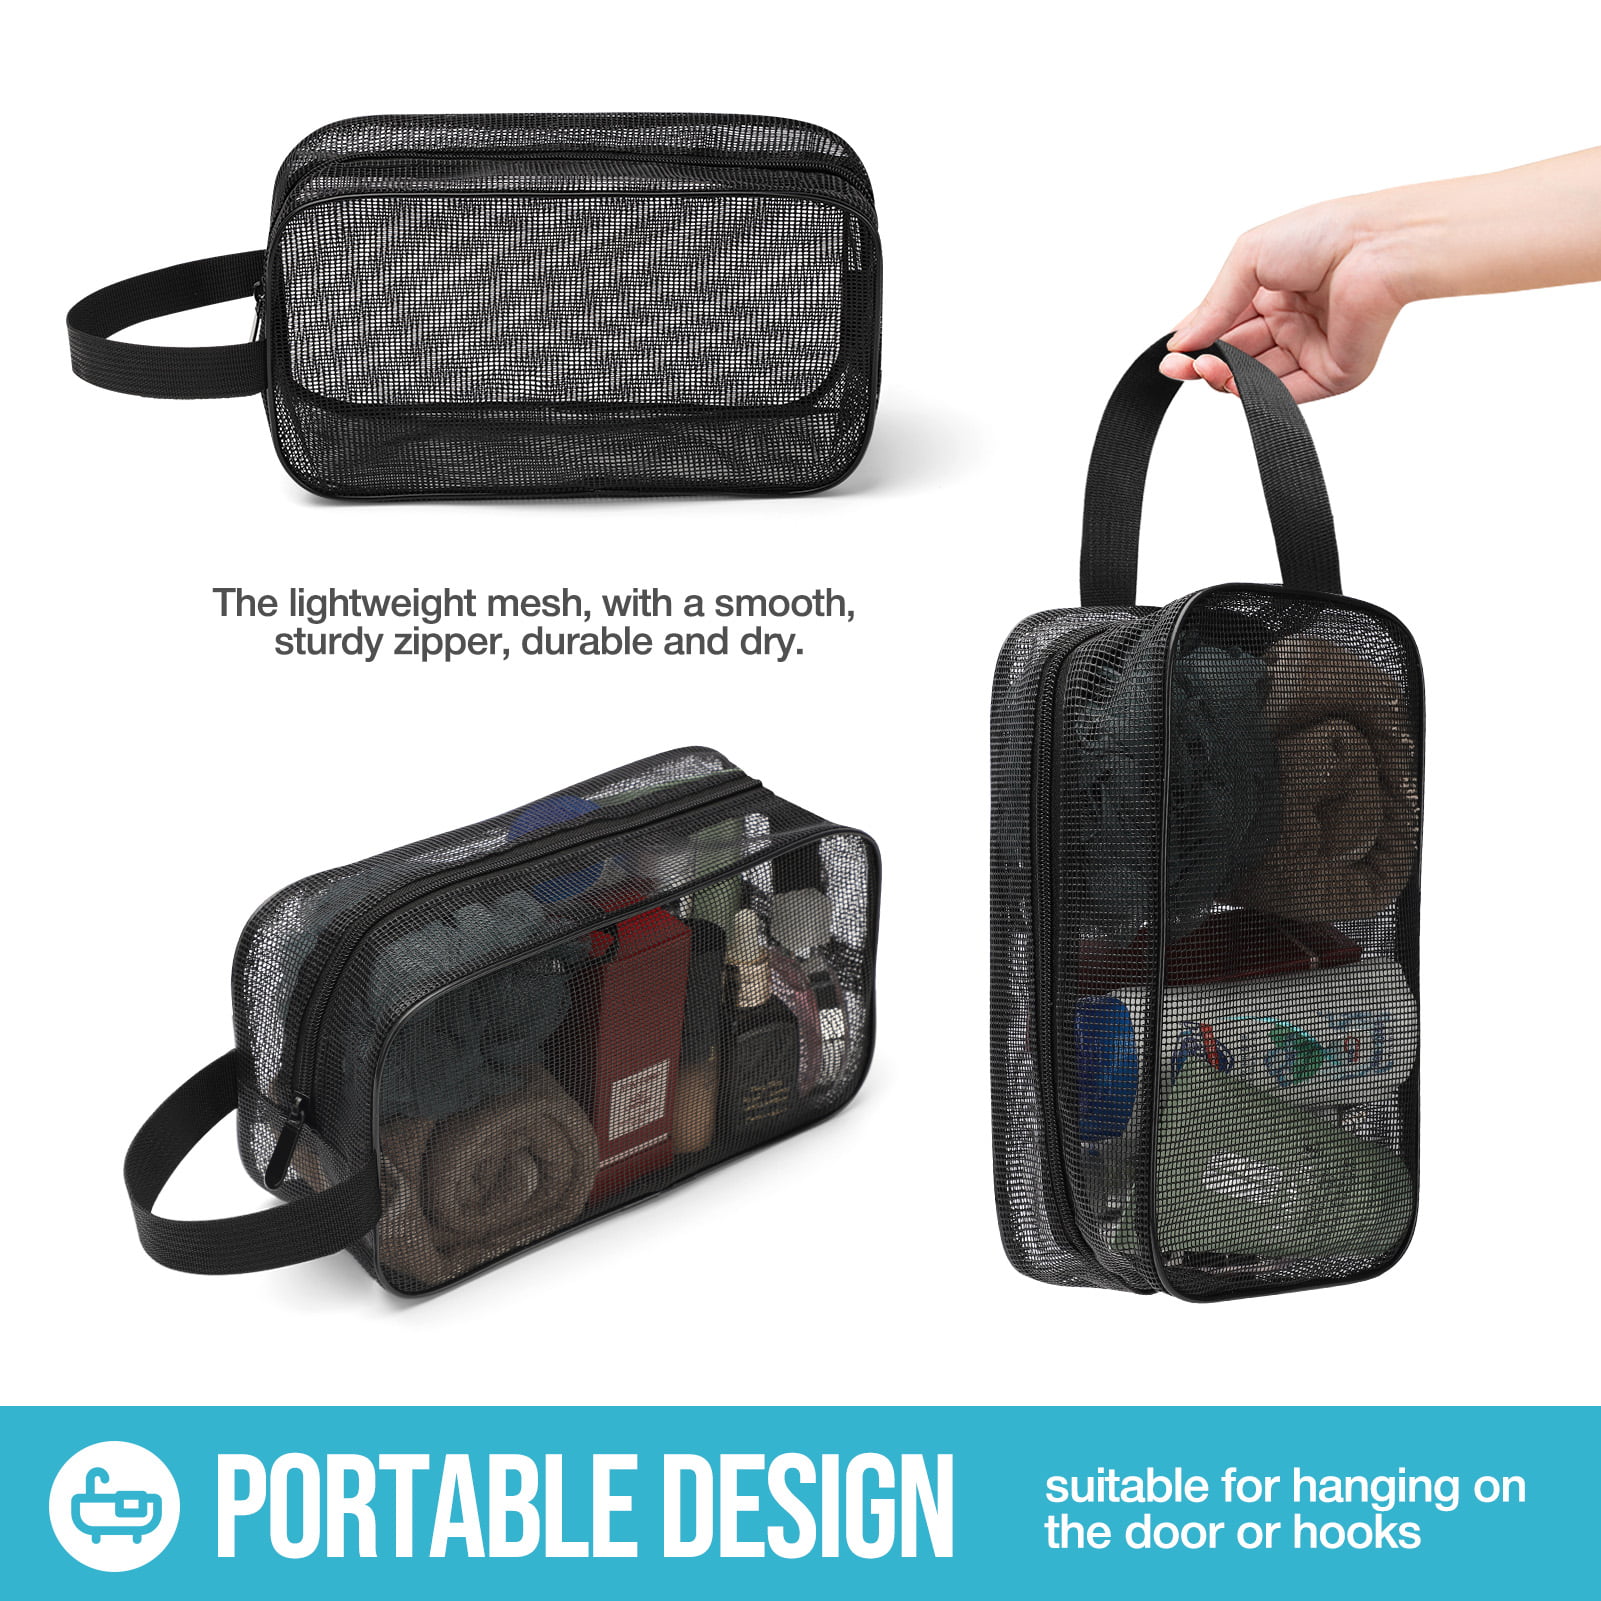 Livhil Portable Shower Caddy Dorm, Toiletry Bag for Women Men, Portable  Travel Hanging Toiletry Bag(Full Size Bottle Compatible)